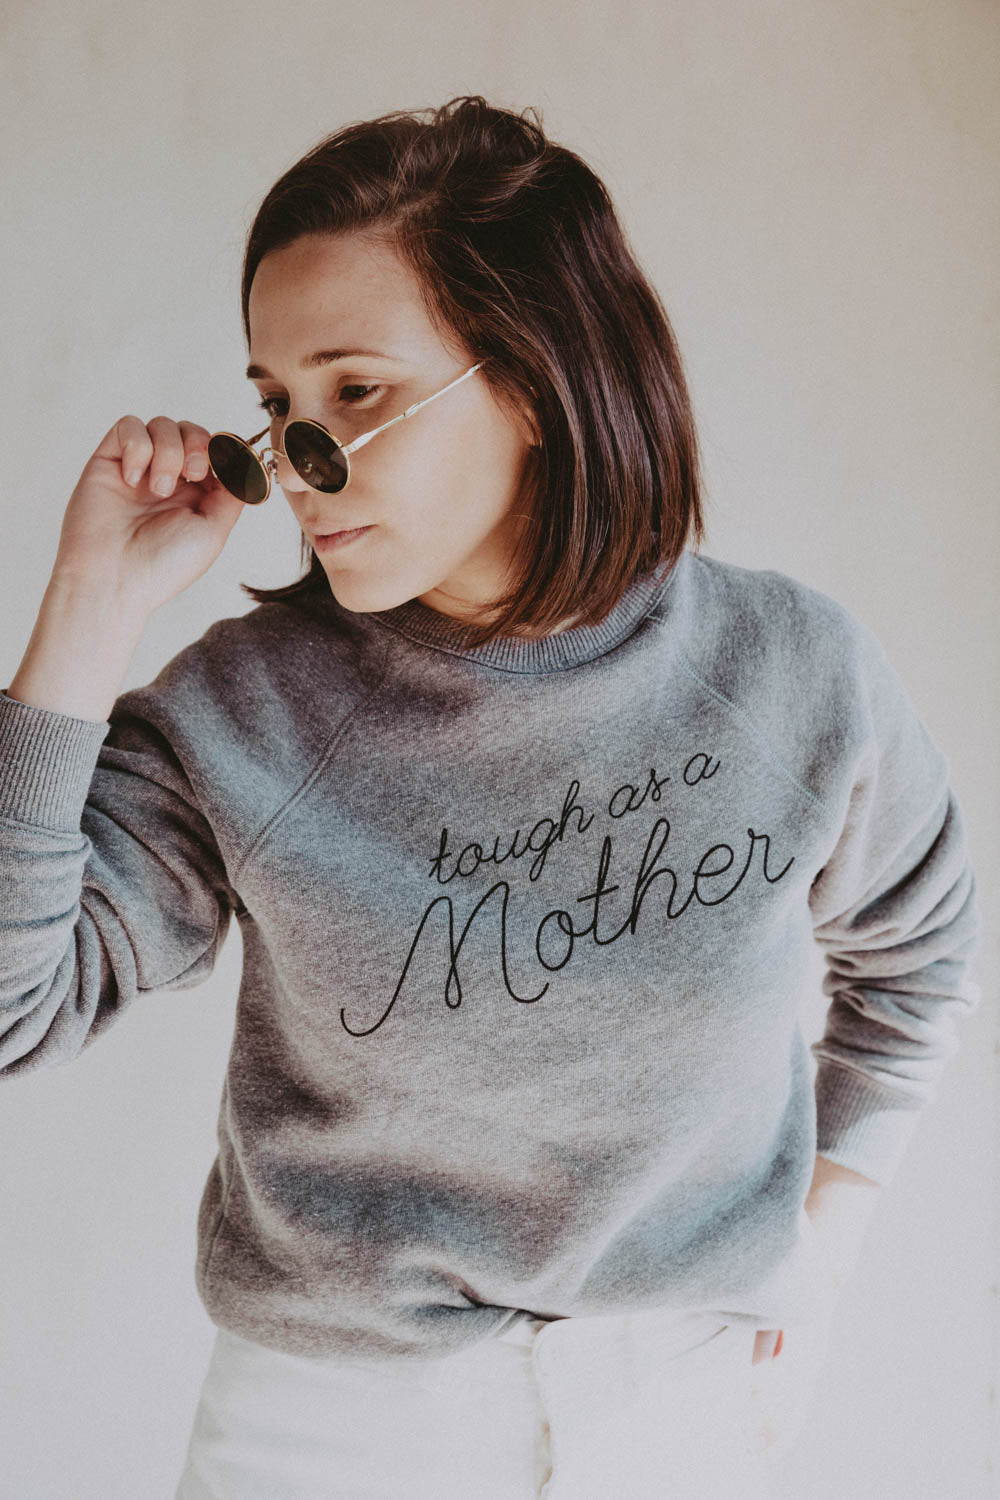 Græder Har det dårligt narre Tough as a Mother Sweatshirt - Unisex Sweatshirt | The Bee & The Fox